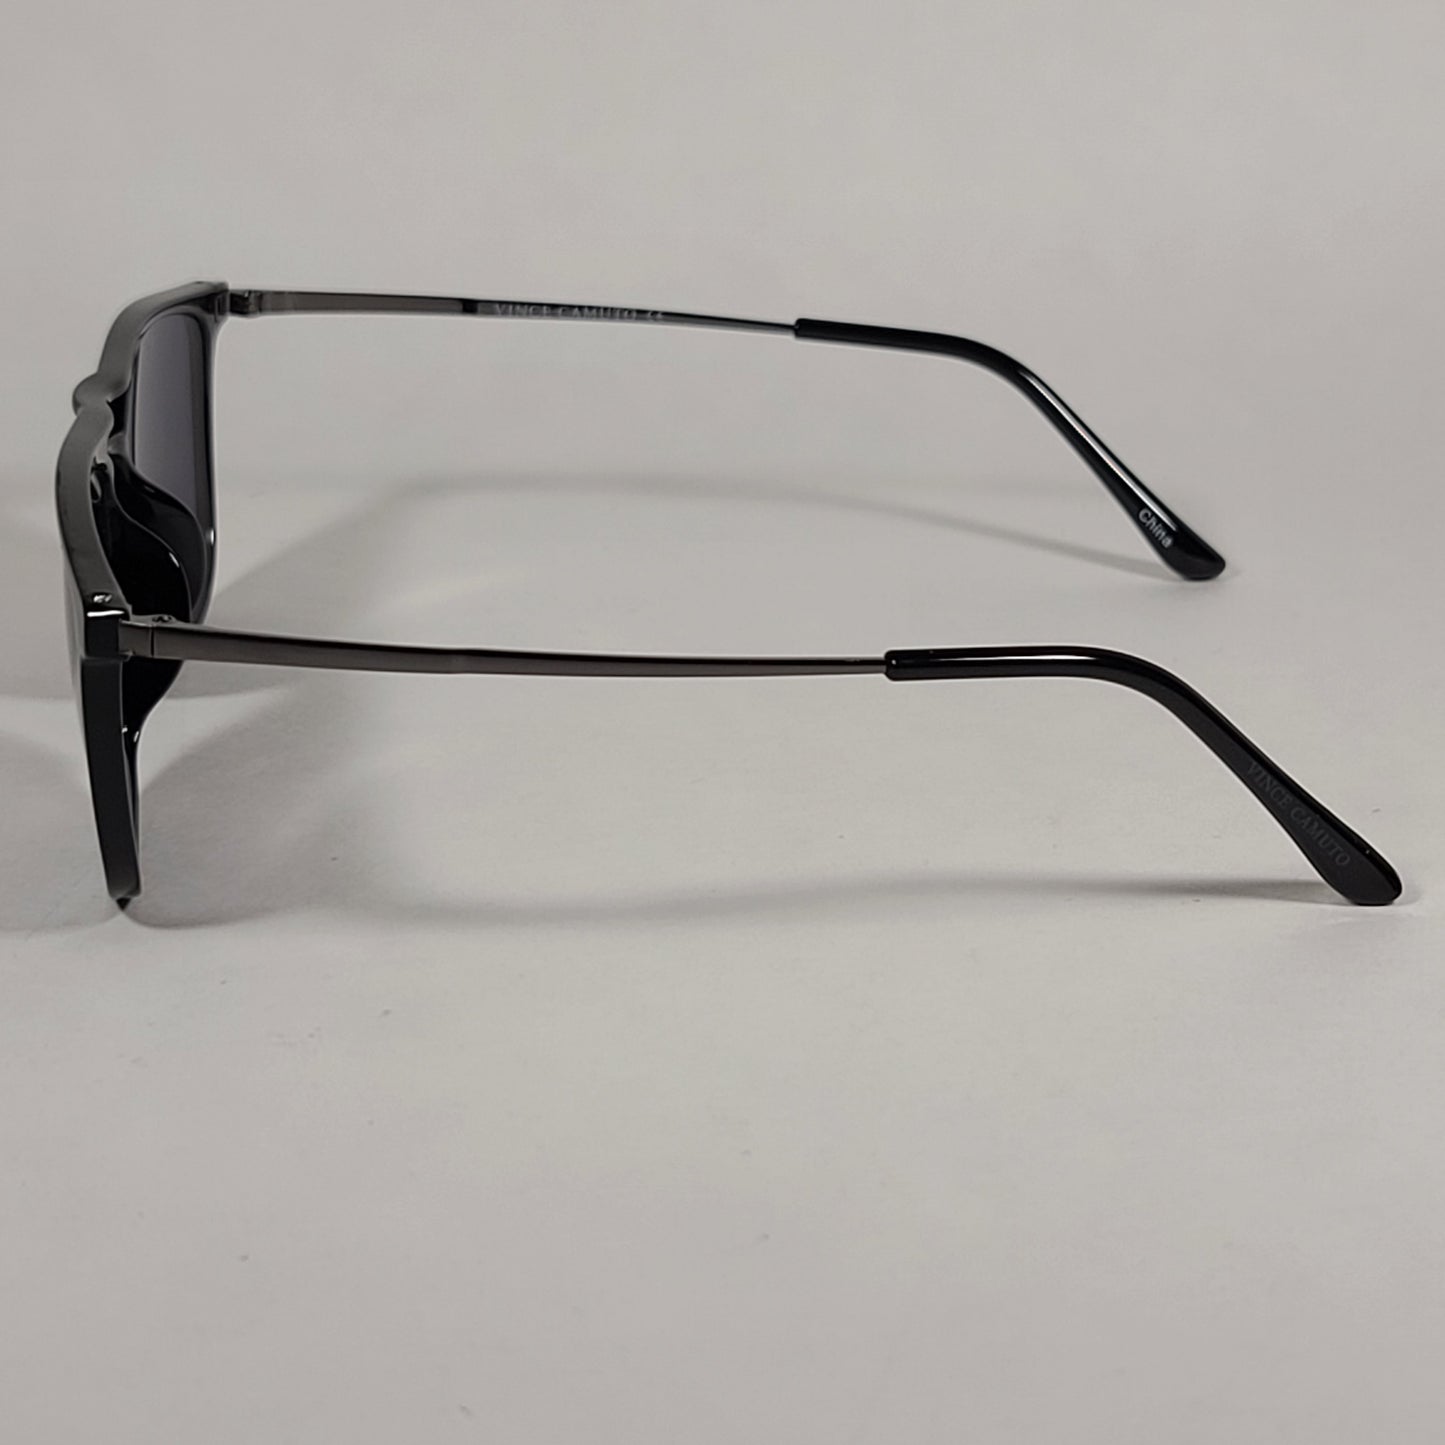 Vince Camuto Rectangle Sunglasses Black And Gunmetal Frame Gray Tinted Lens VM620 OX - Sunglasses